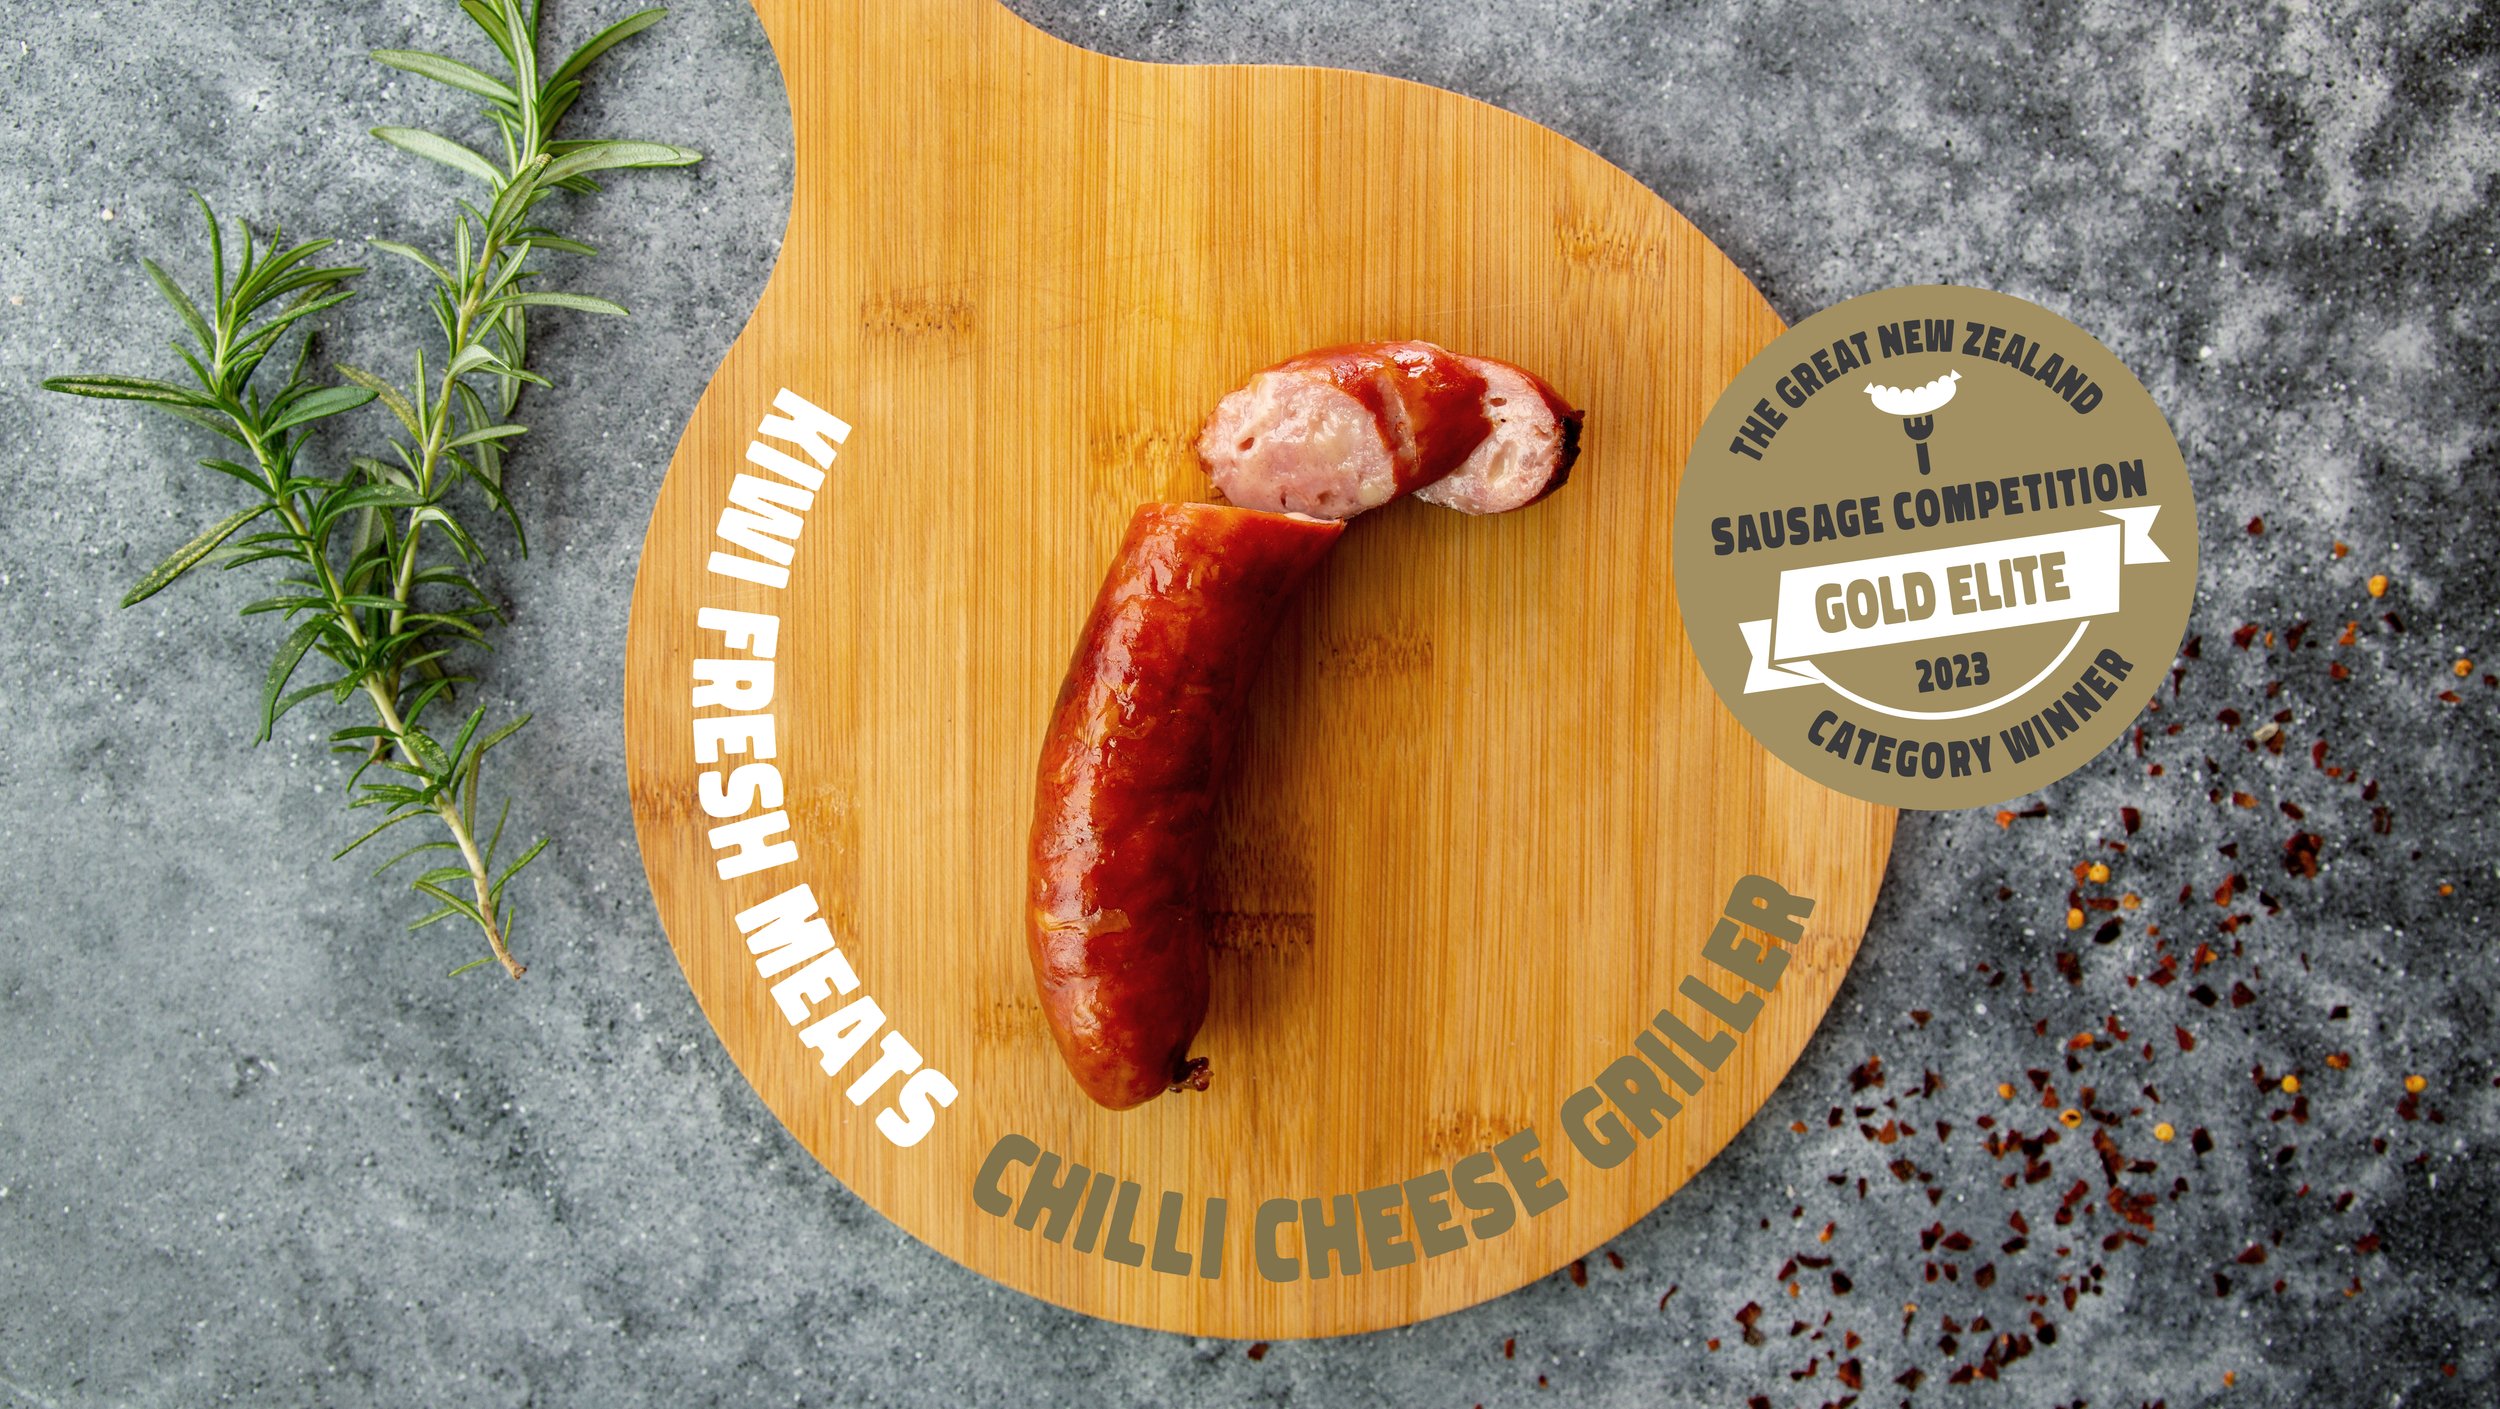 Kiwi Fresh Meats_Chilli Cheese Griller.jpg